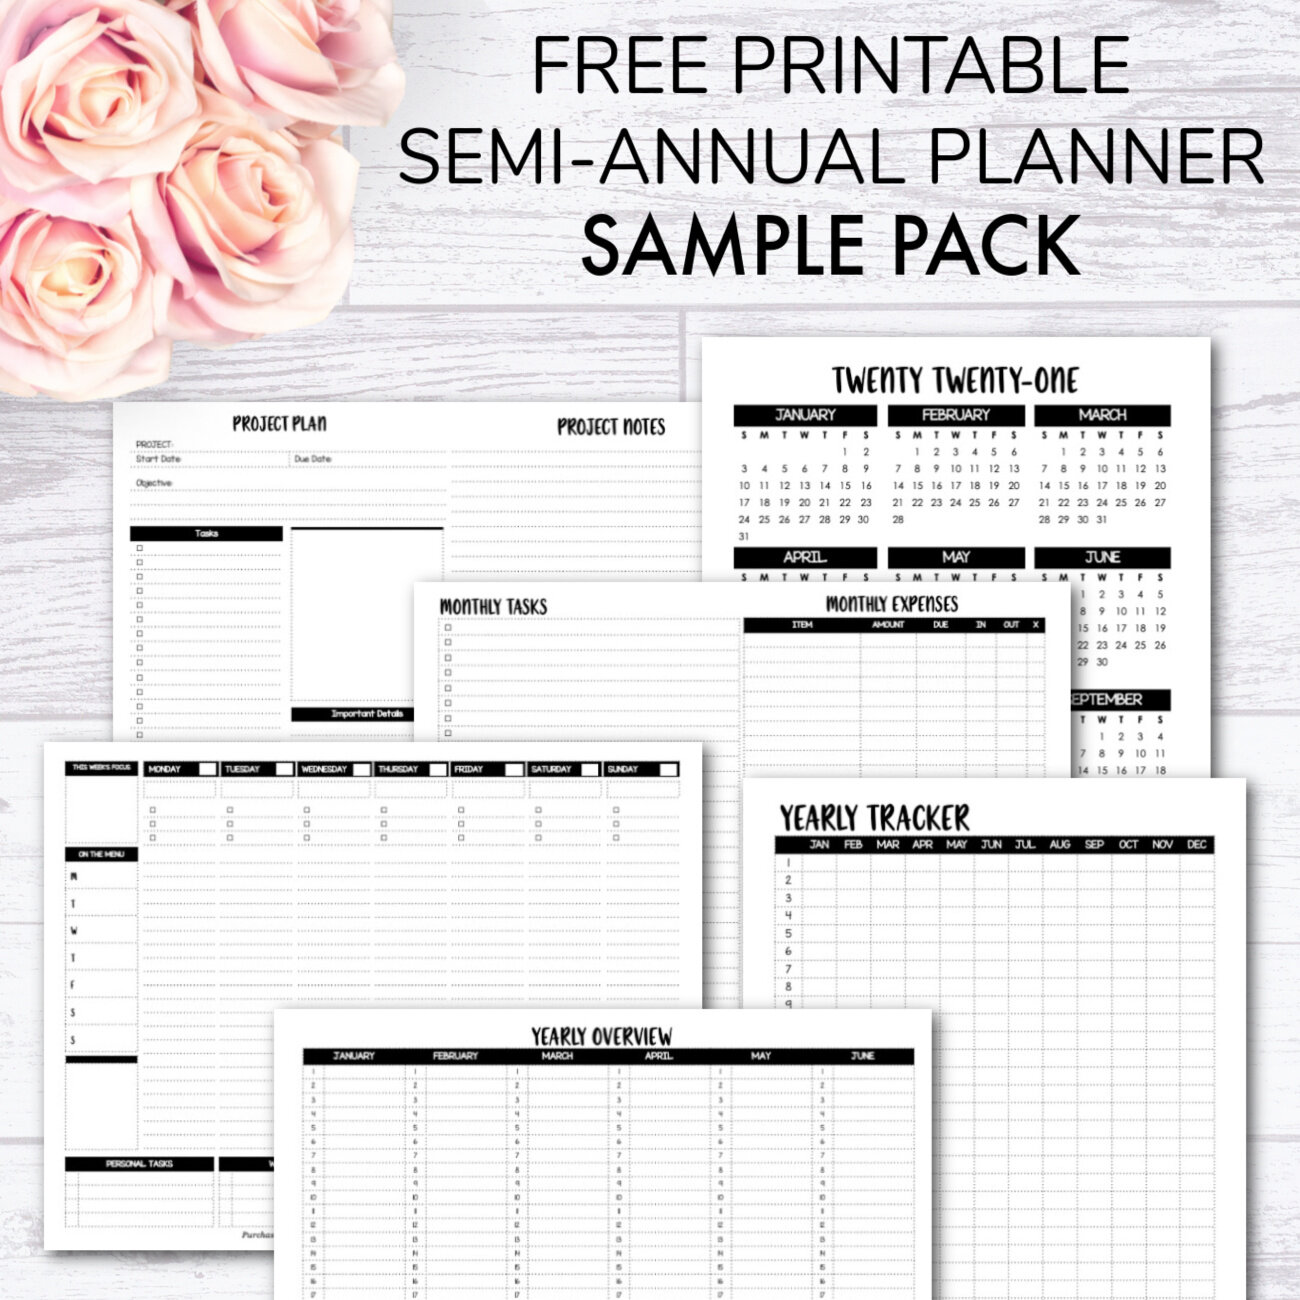 Free Printable Semi-Annual Planner Sample Pack